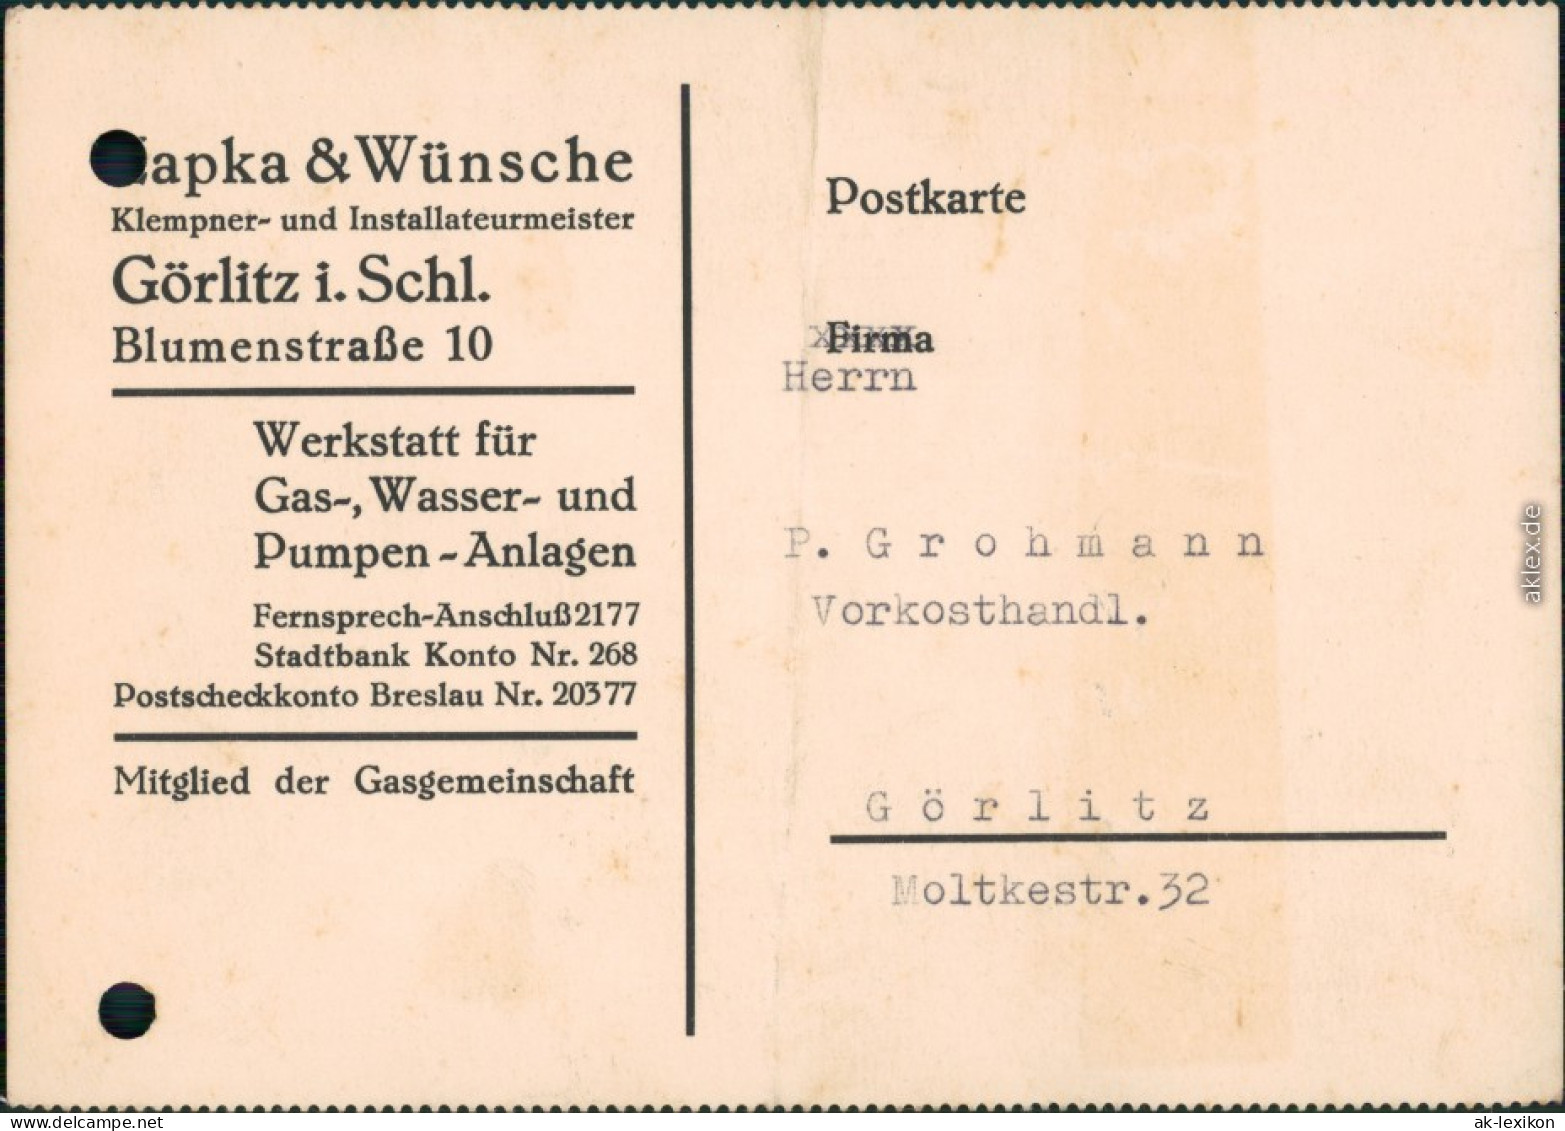 Görlitz Zgorzelec Zapka&Wünsche Klempnermeister Blumenstraße 10 Werbekarte 1938 - Goerlitz